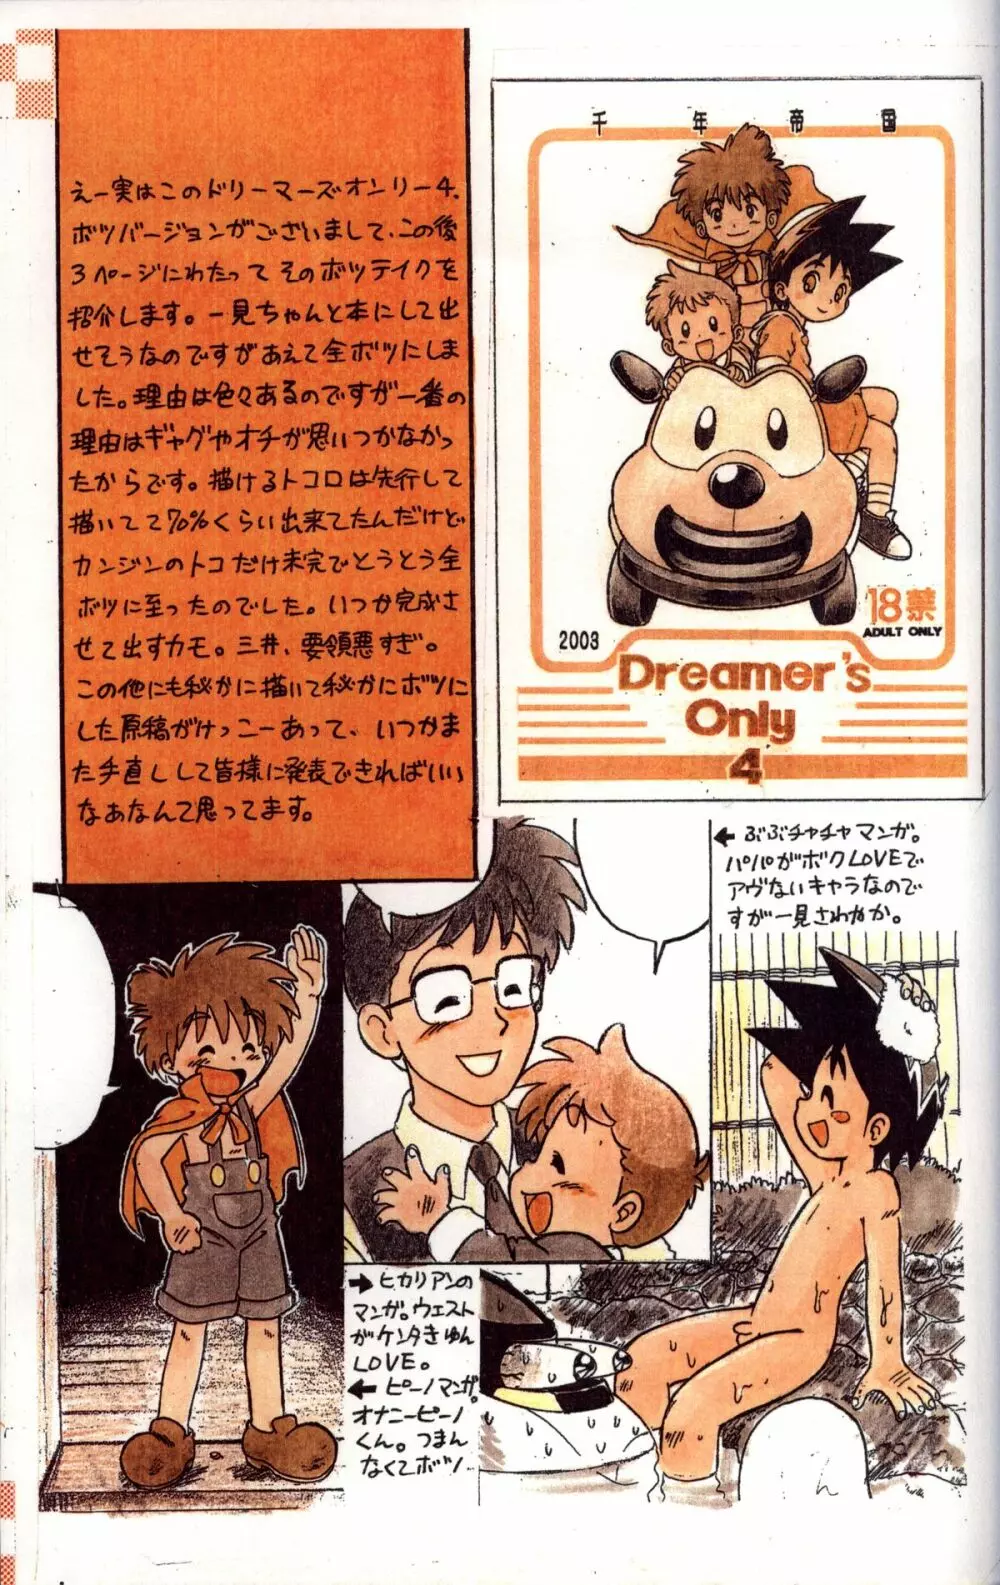 Mitsui Jun - Dreamer's Only 4 - page17